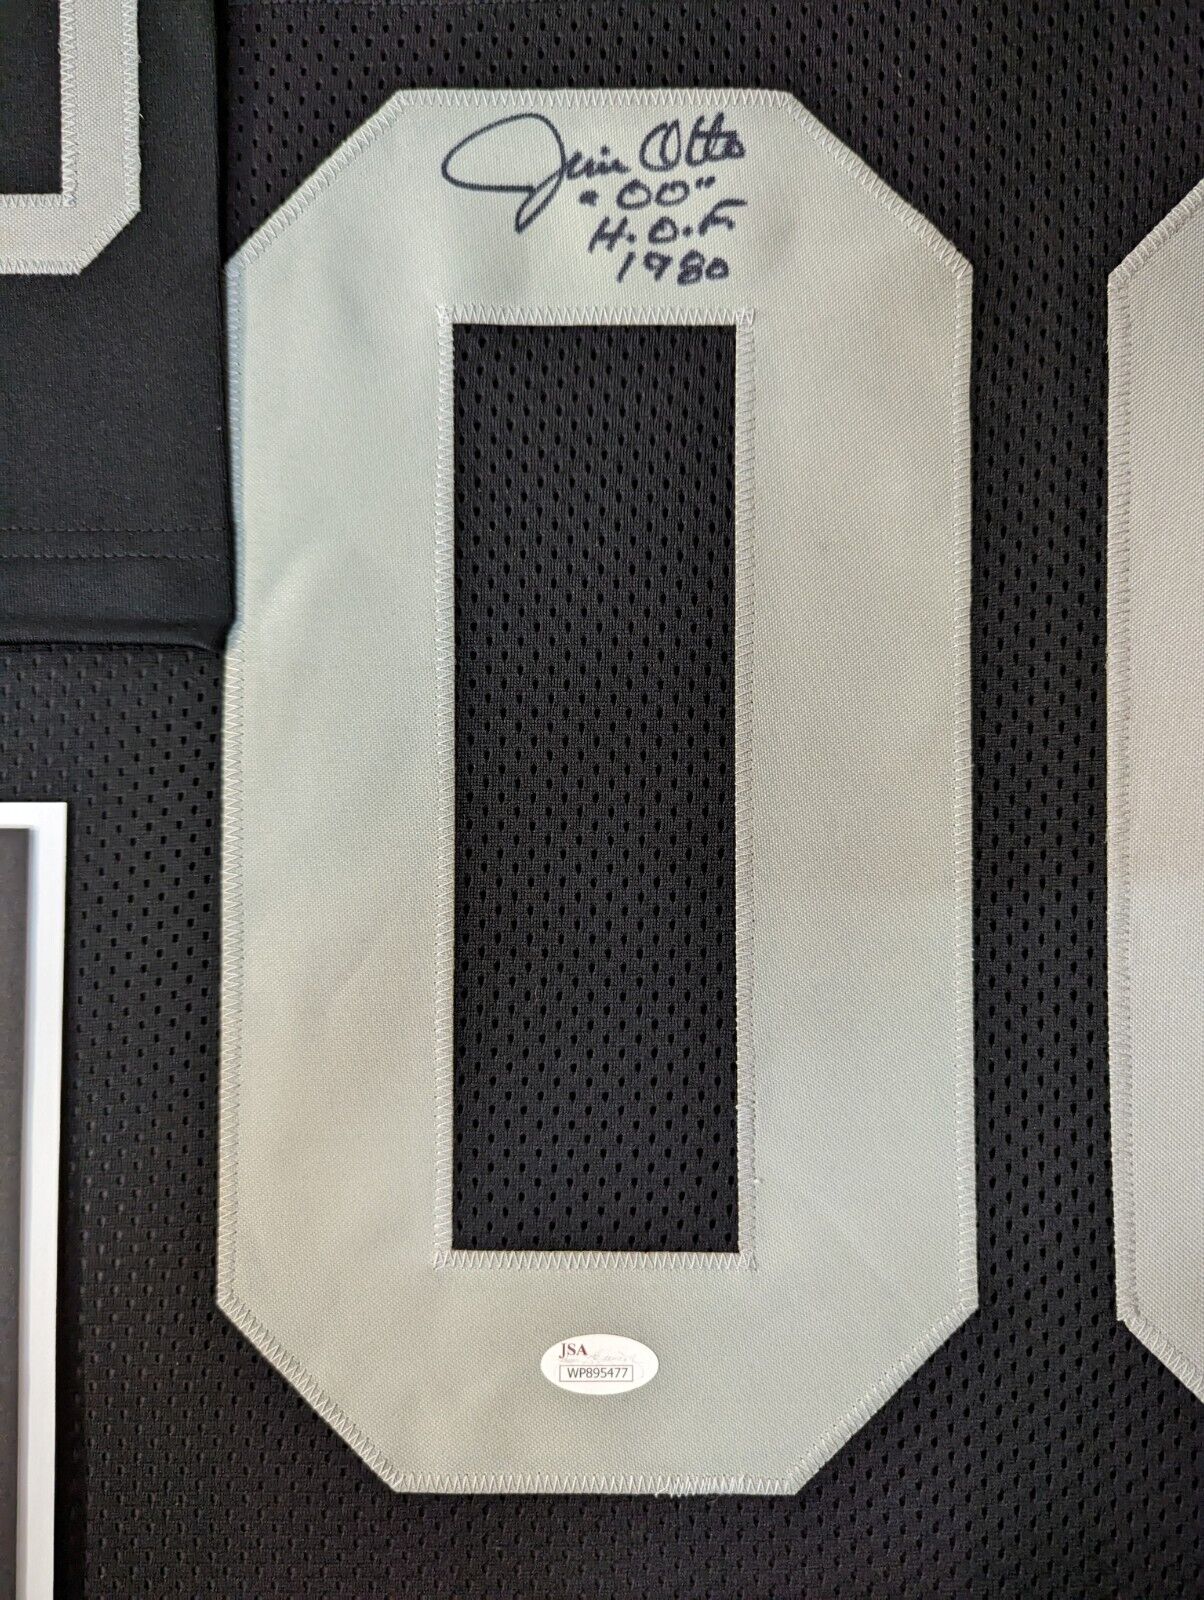 Jim Otto Autographed Signed Framed Oakland Raiders Jersey JSA